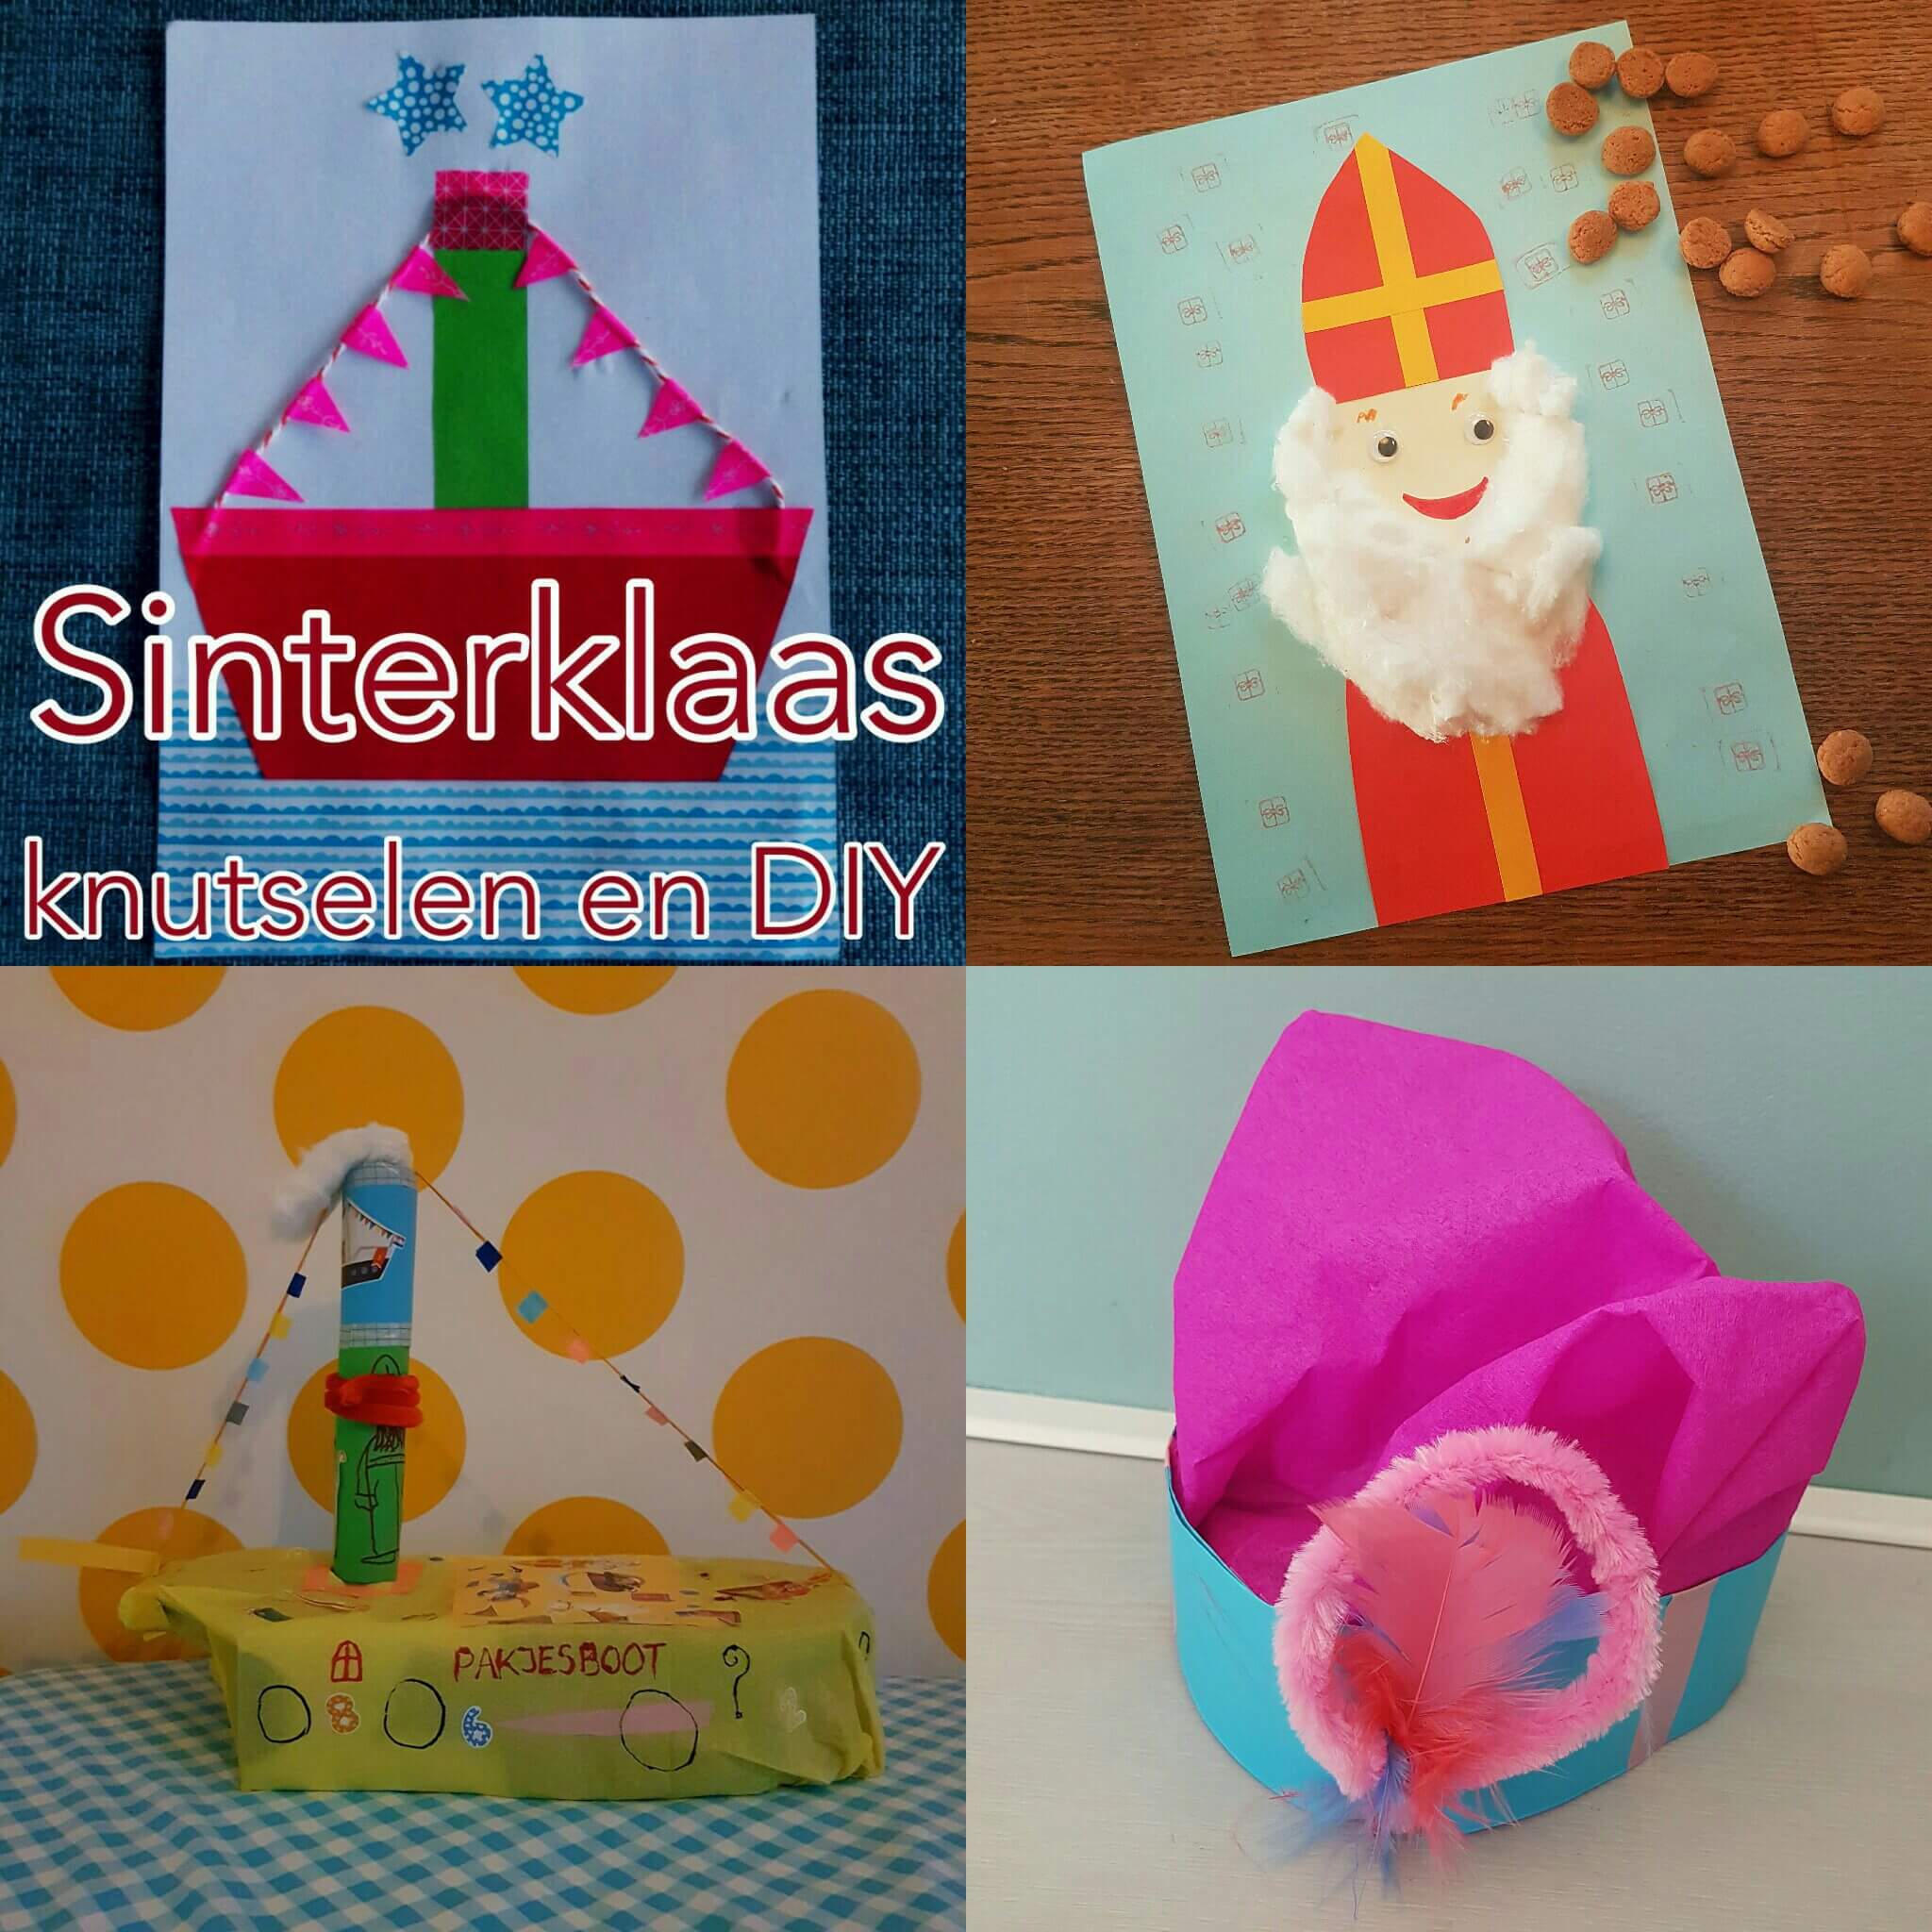 Sinterklaas: 101 ideeën om te knutselen